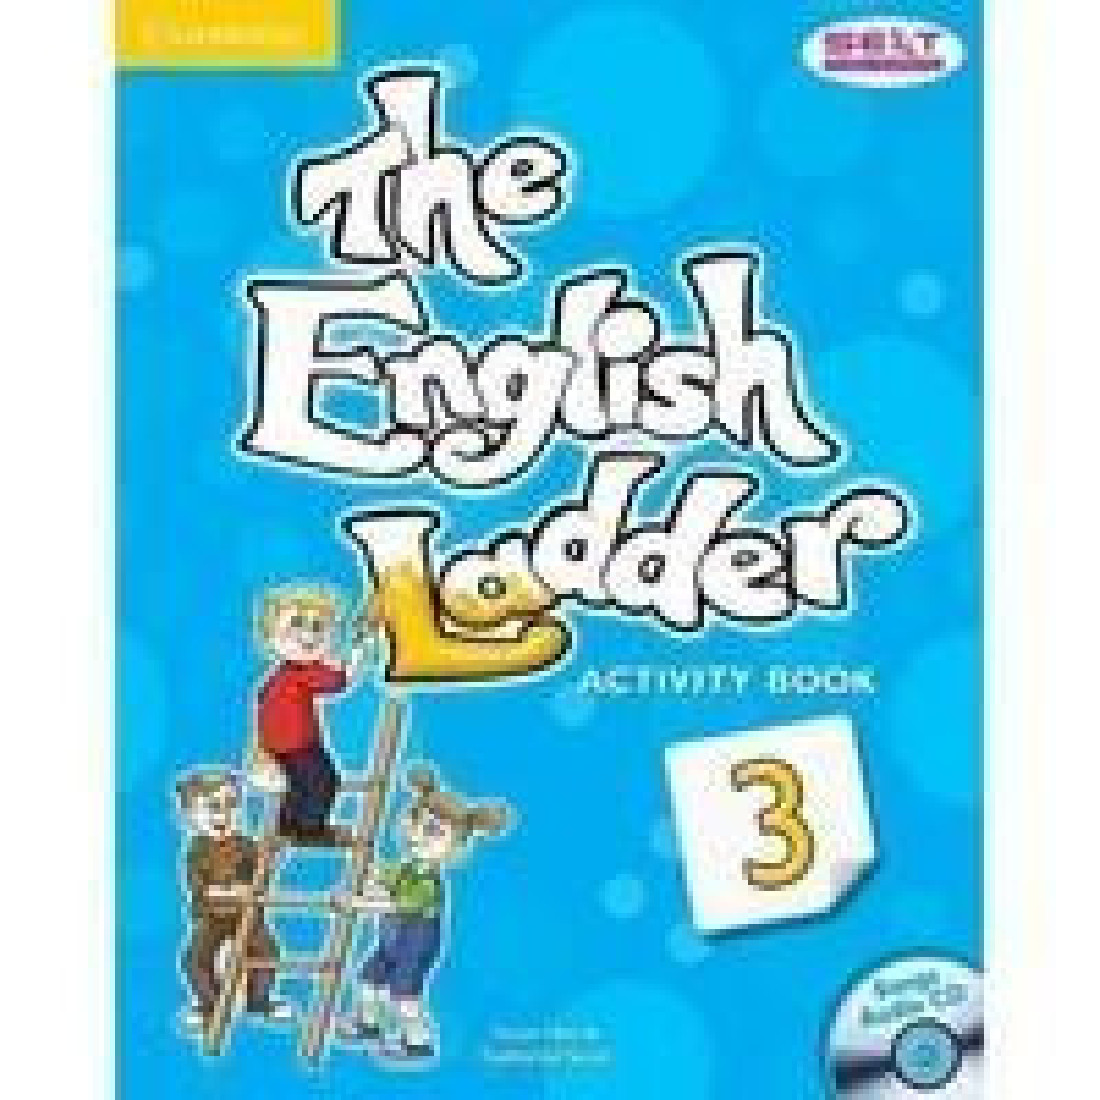 ENGLISH LADDER LEVEL 3 WORKBOOK (+SONGS CD)